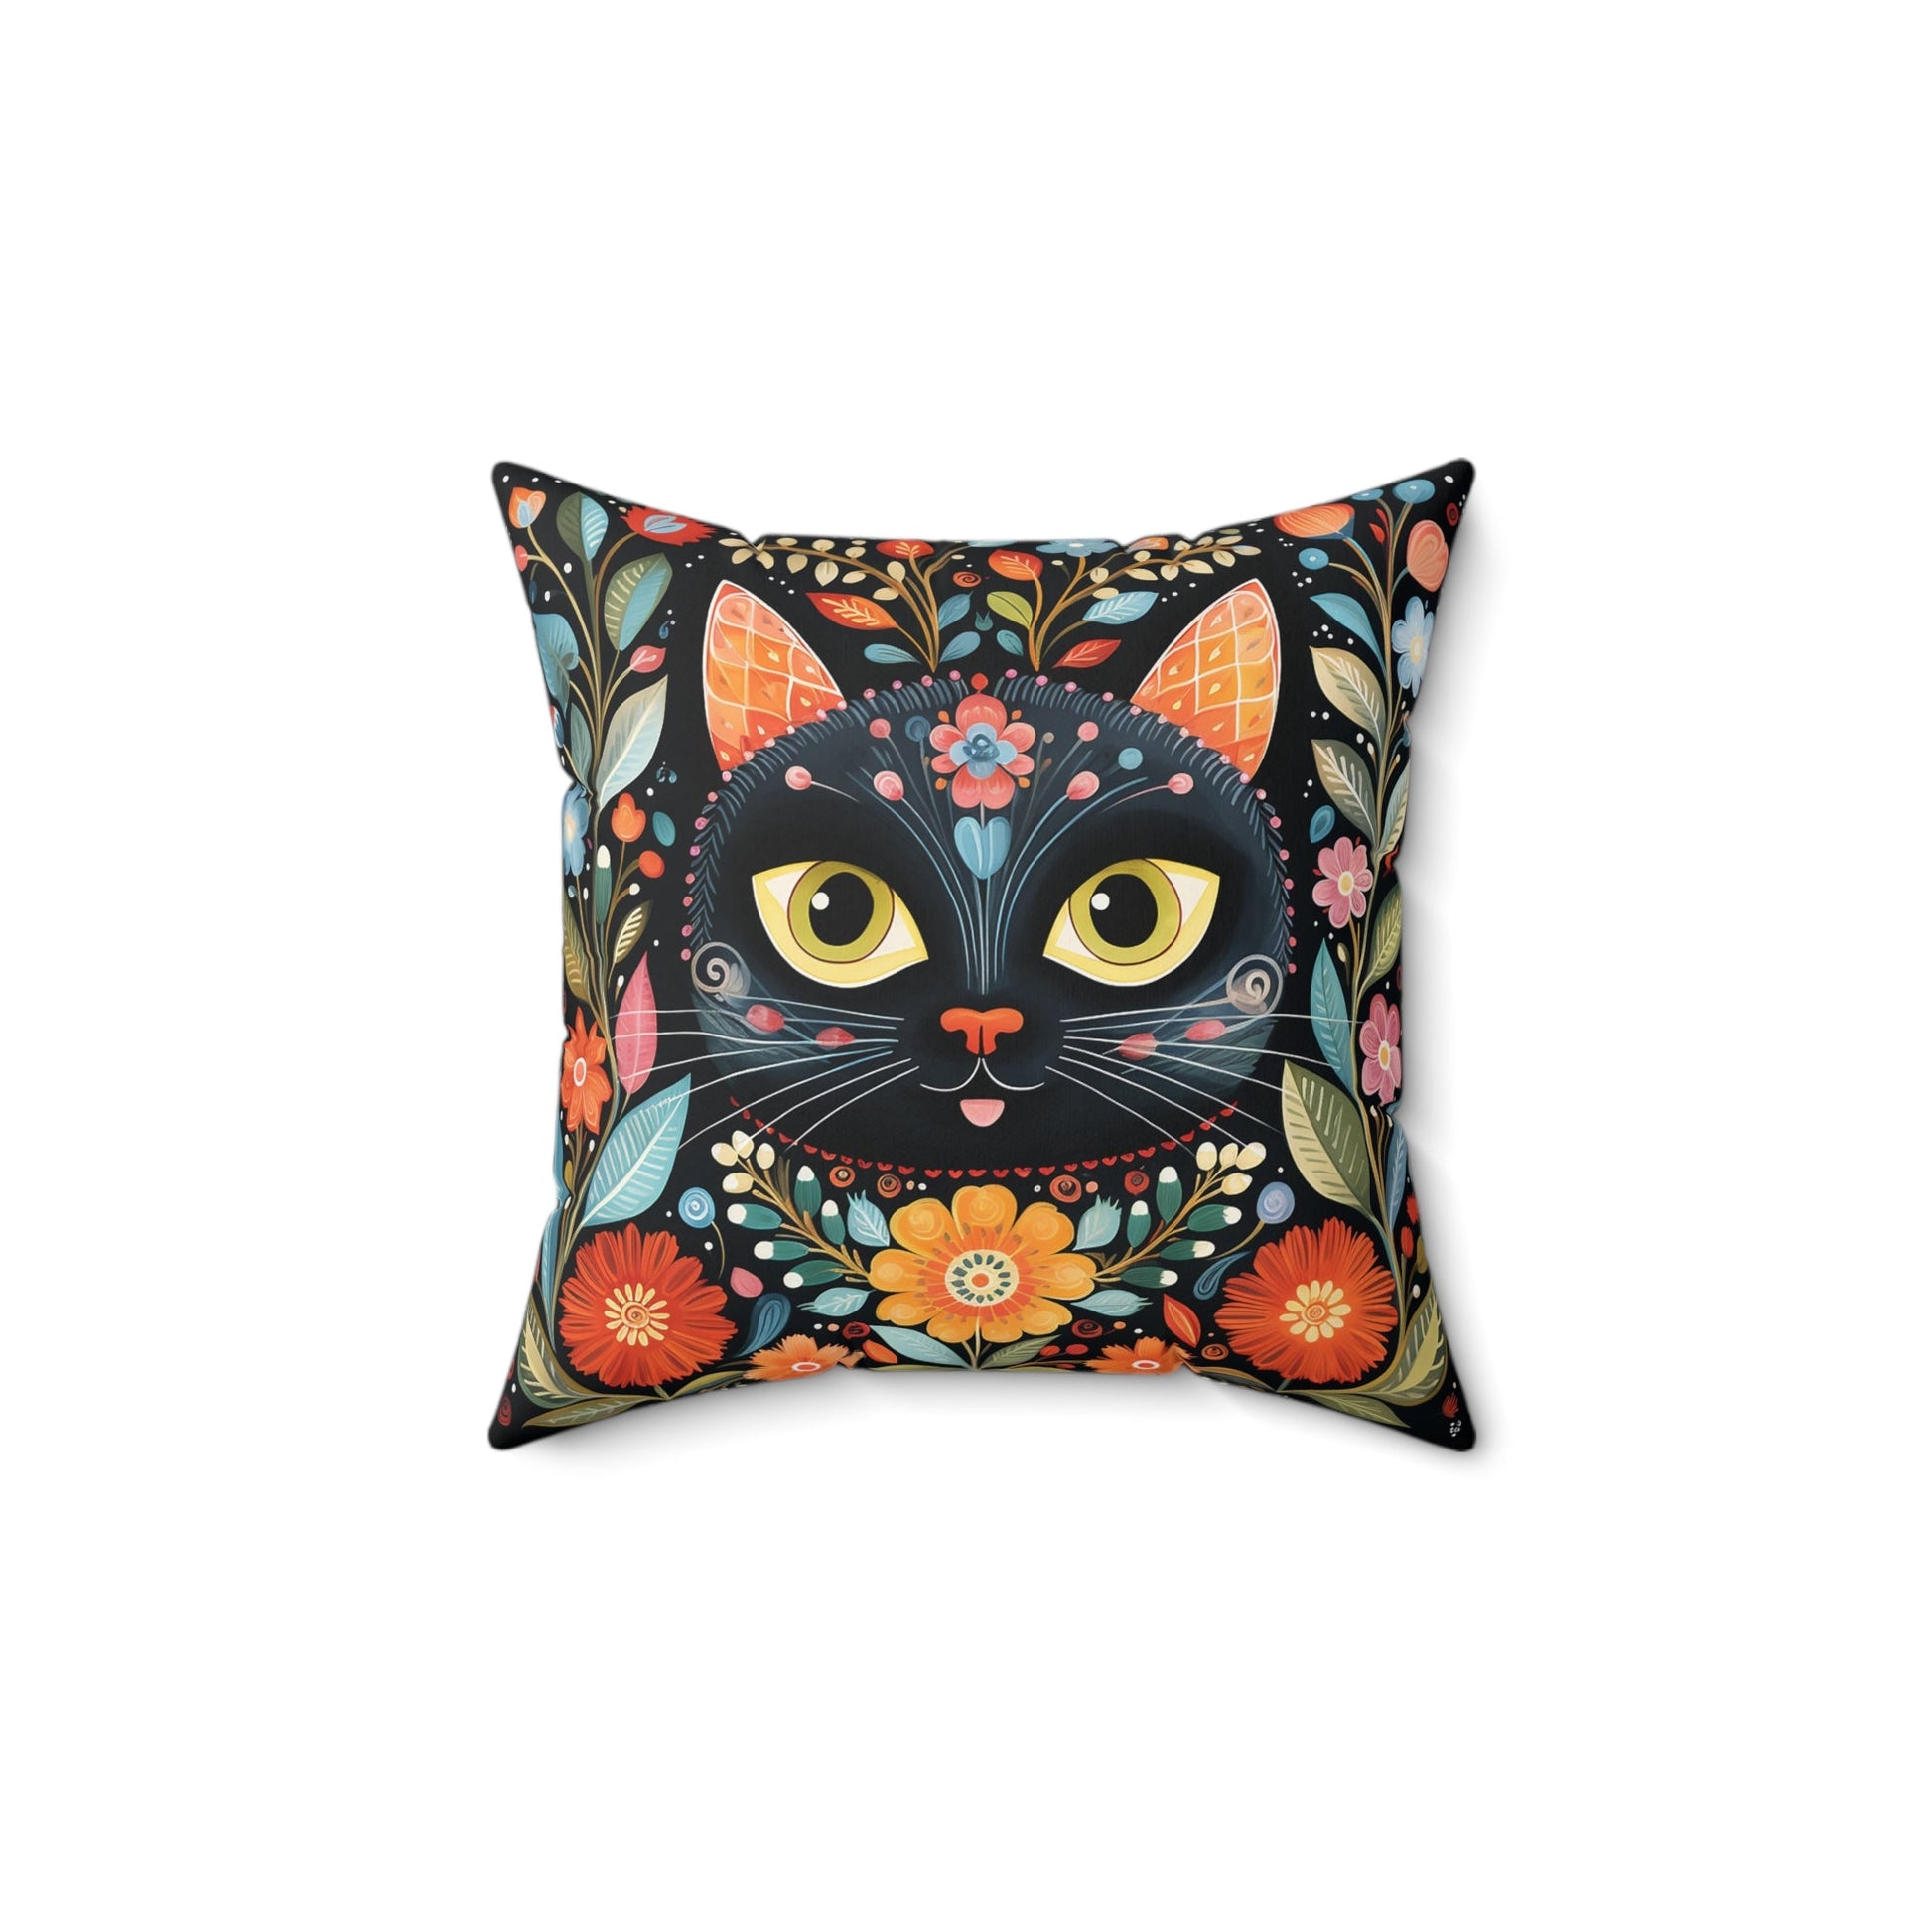 Boho Cat Pillow - Decorative Cat Boho Print Throw Pillow Cover 4 sizes, Bright Boho Decor, Vintage Folk Art, Gift for Artists, Accent Throw - FlooredByArt